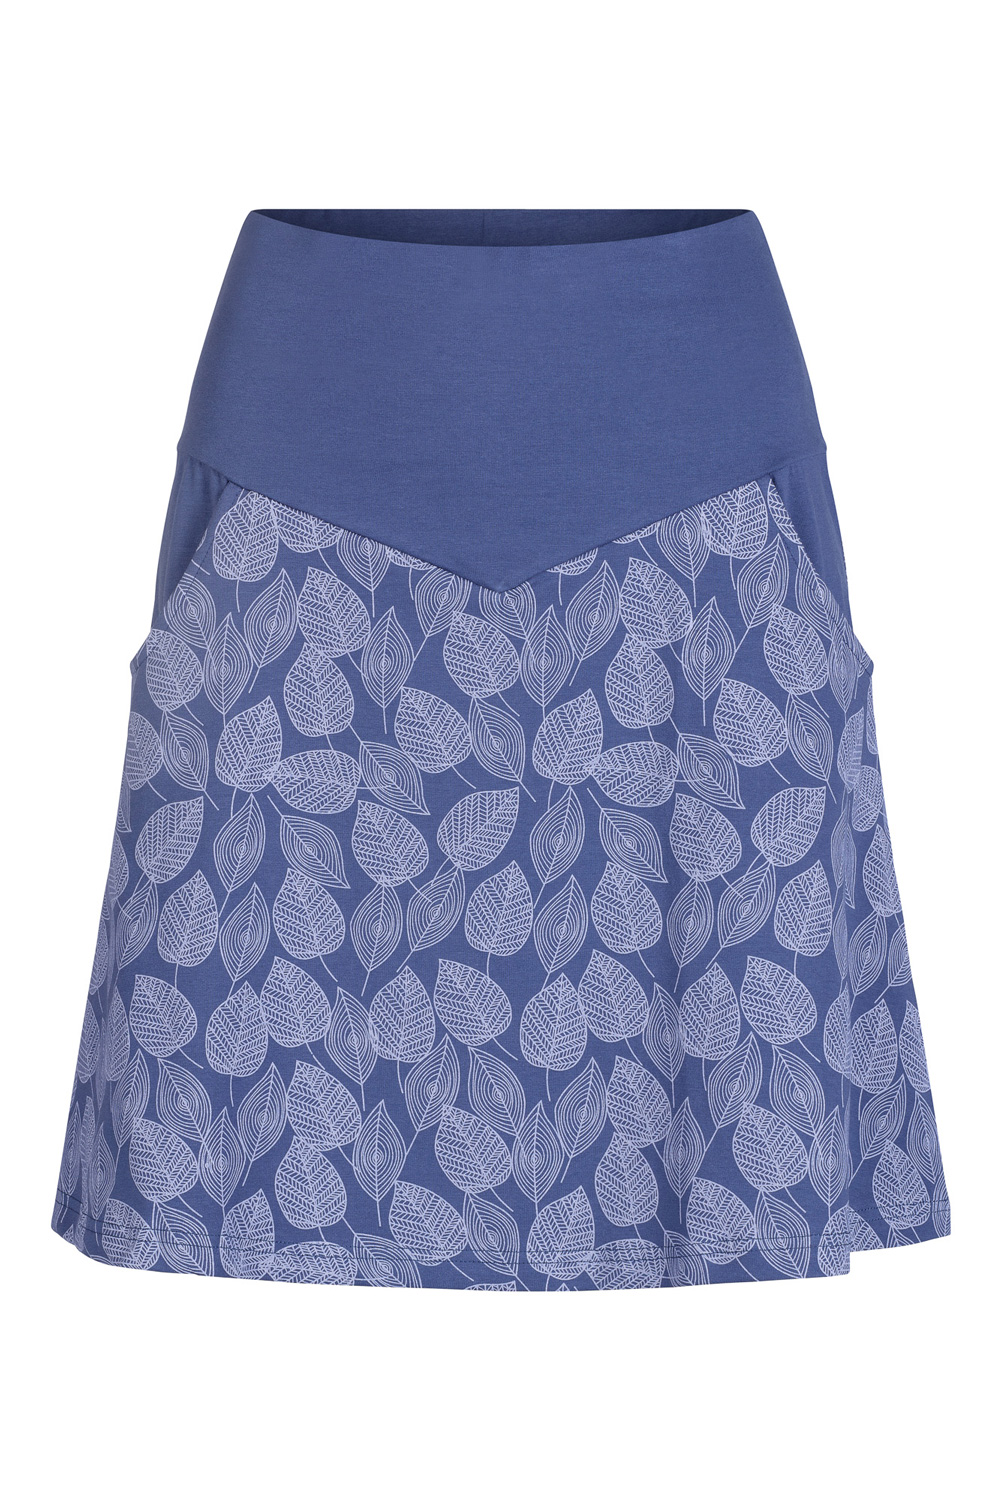 Wicked Dragon Clothing - Organic cotton leaf print skirt